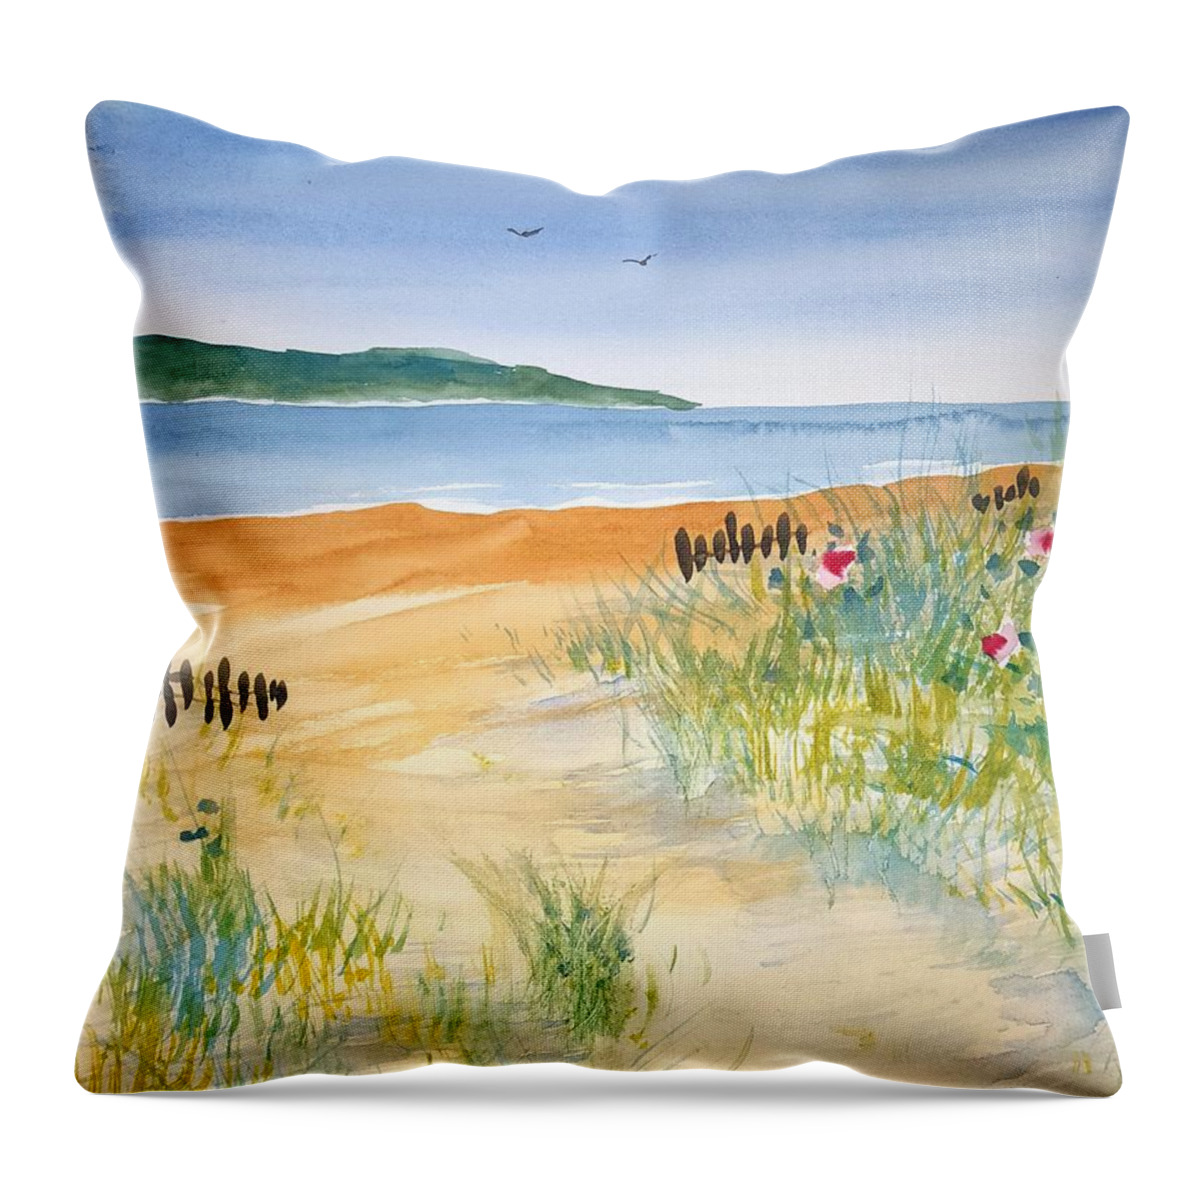 Watercolor Throw Pillow featuring the painting Beach Walk by John Klobucher